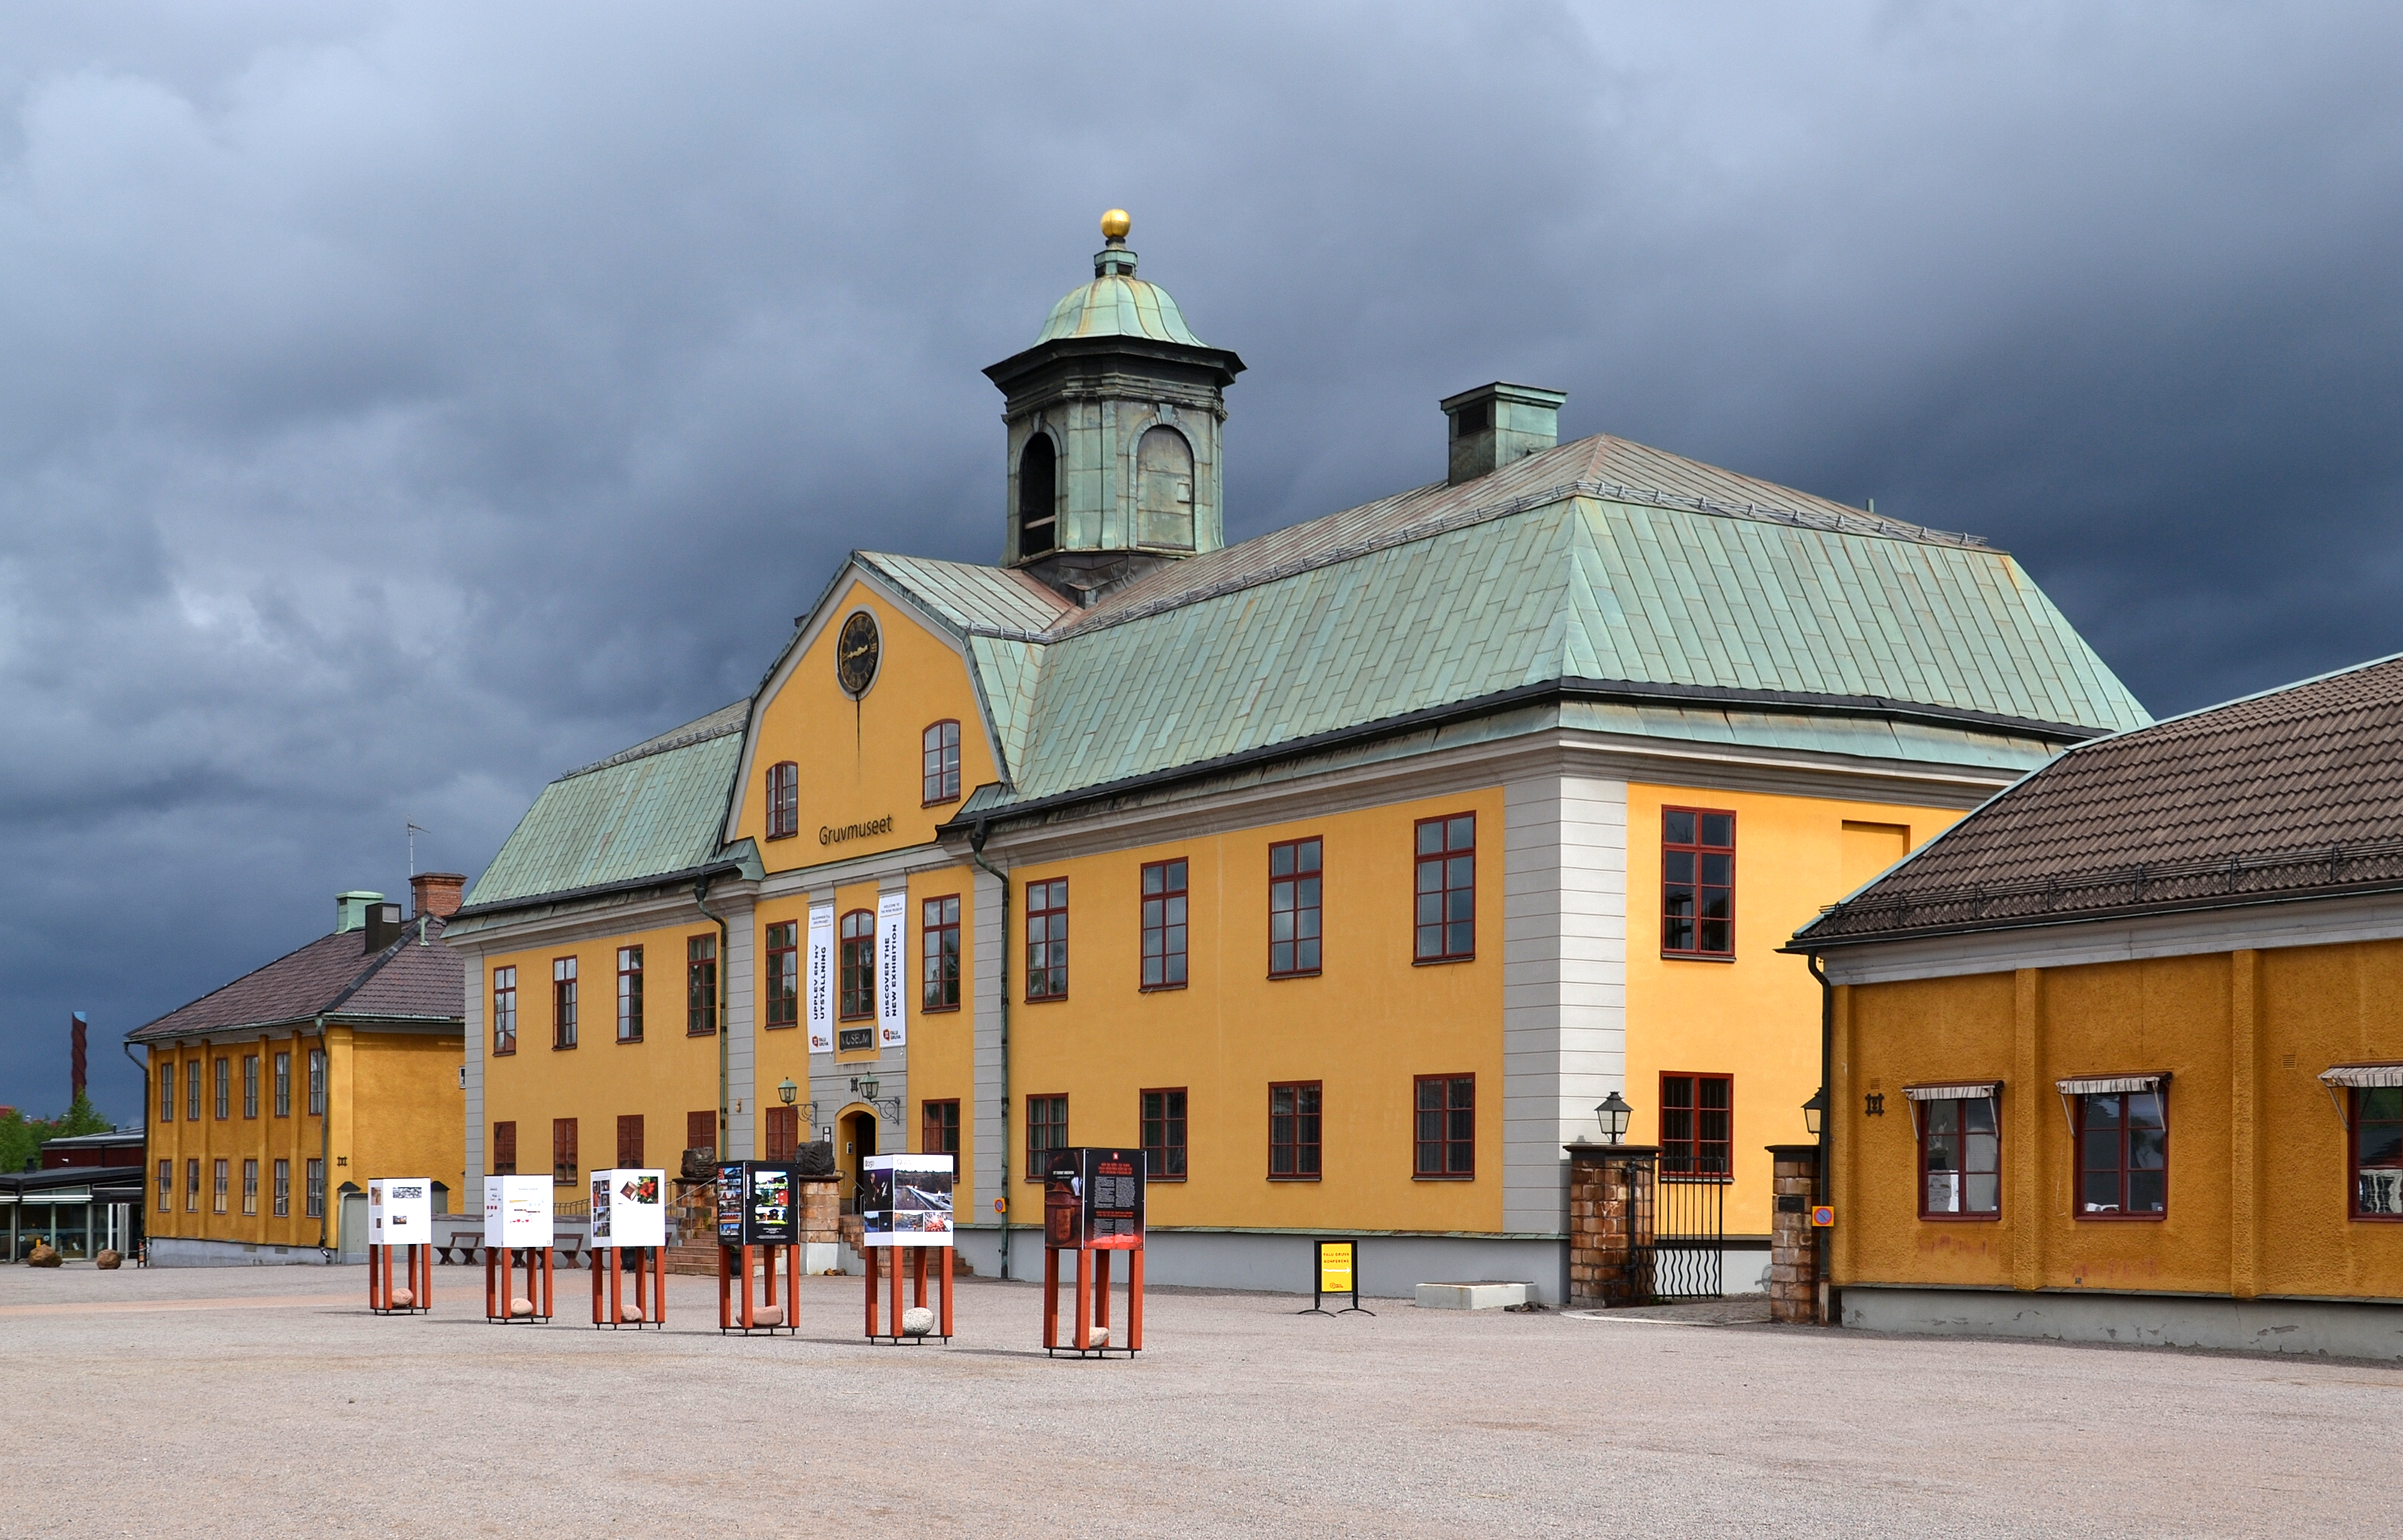 Copper Mine Museum in Falun